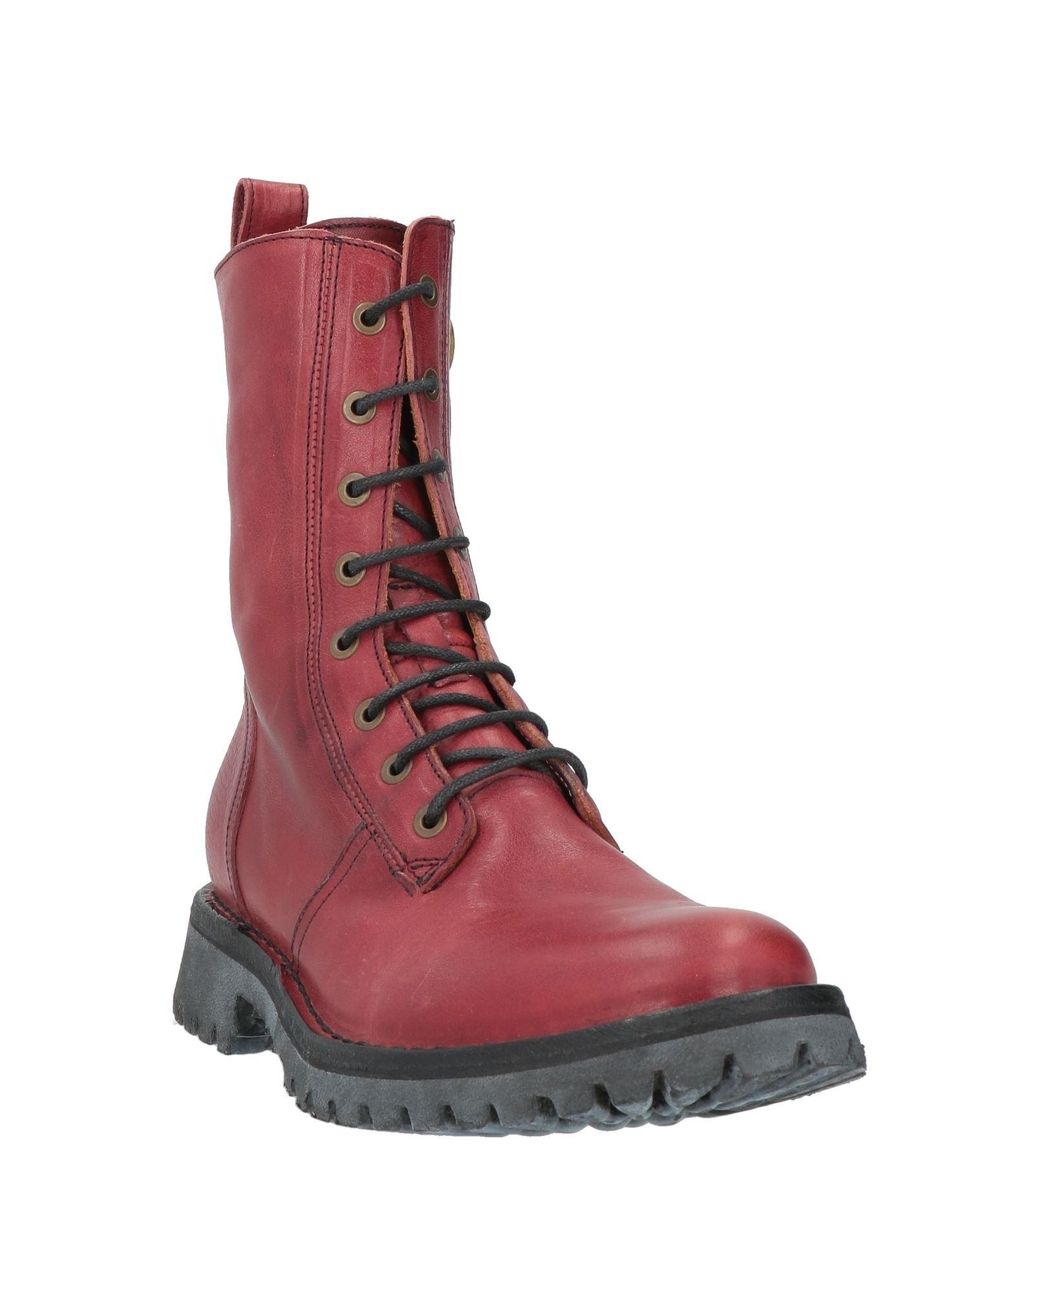 Unilady | Shoes | Red Chunky Heeled Combat Boots Lace Up | Poshmark